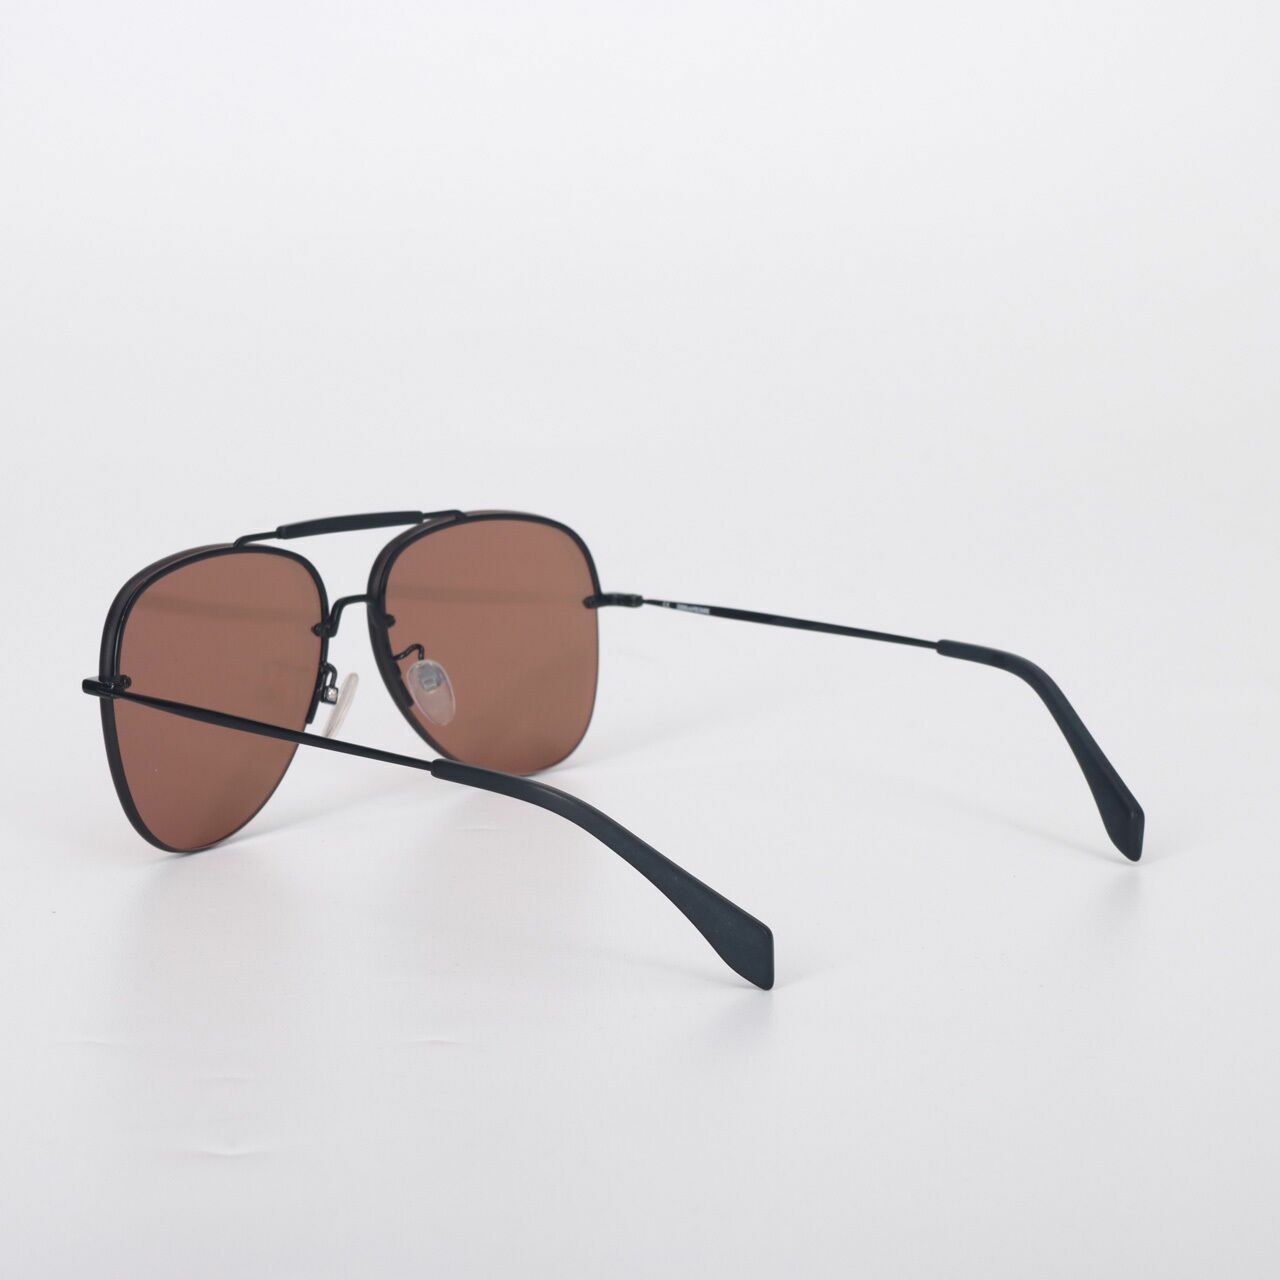 Zadig Voltaire SZV149 Brown & Black Sunglasses 